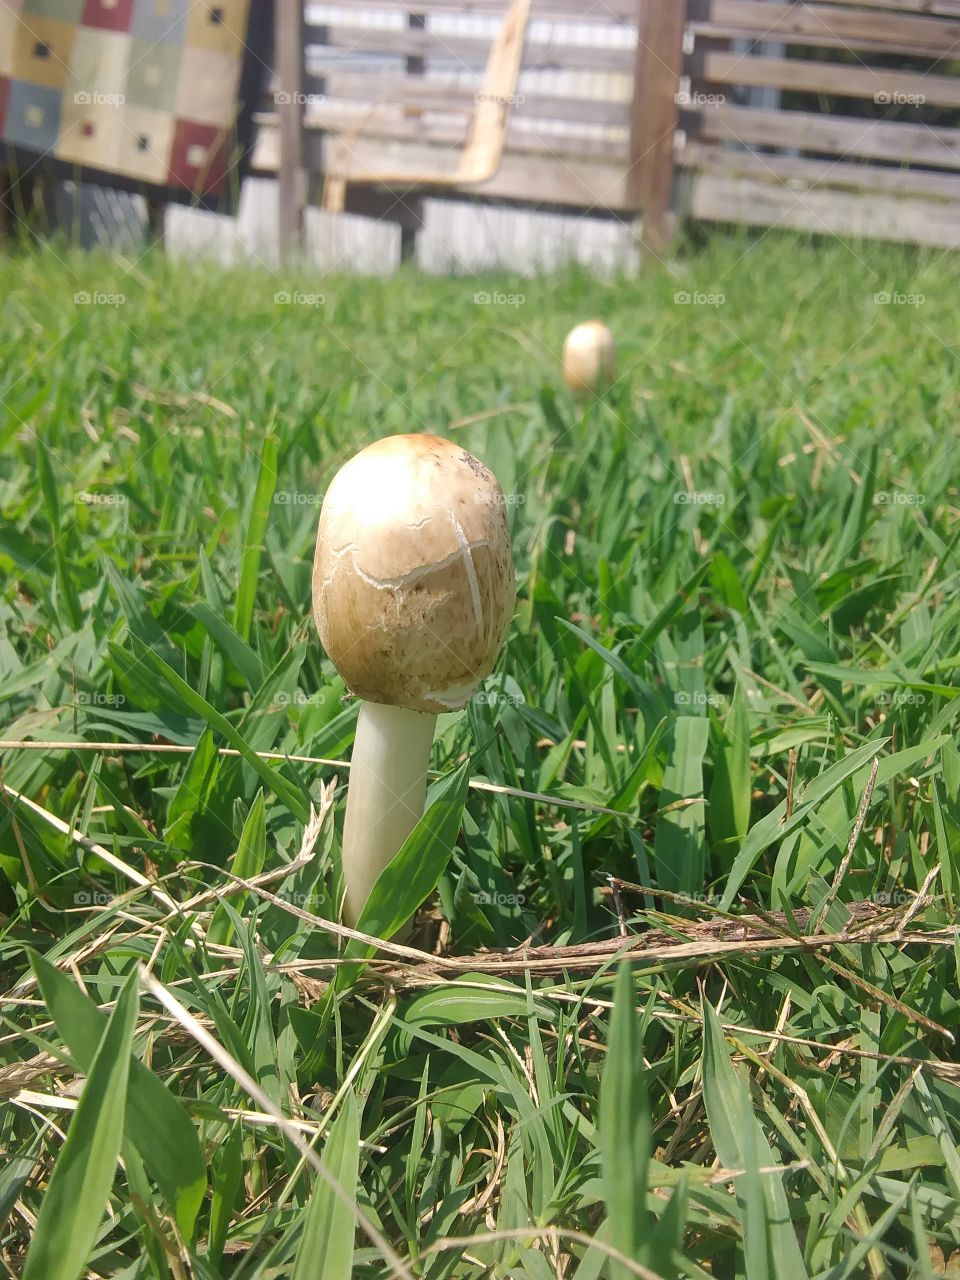 tee off with a mushroom